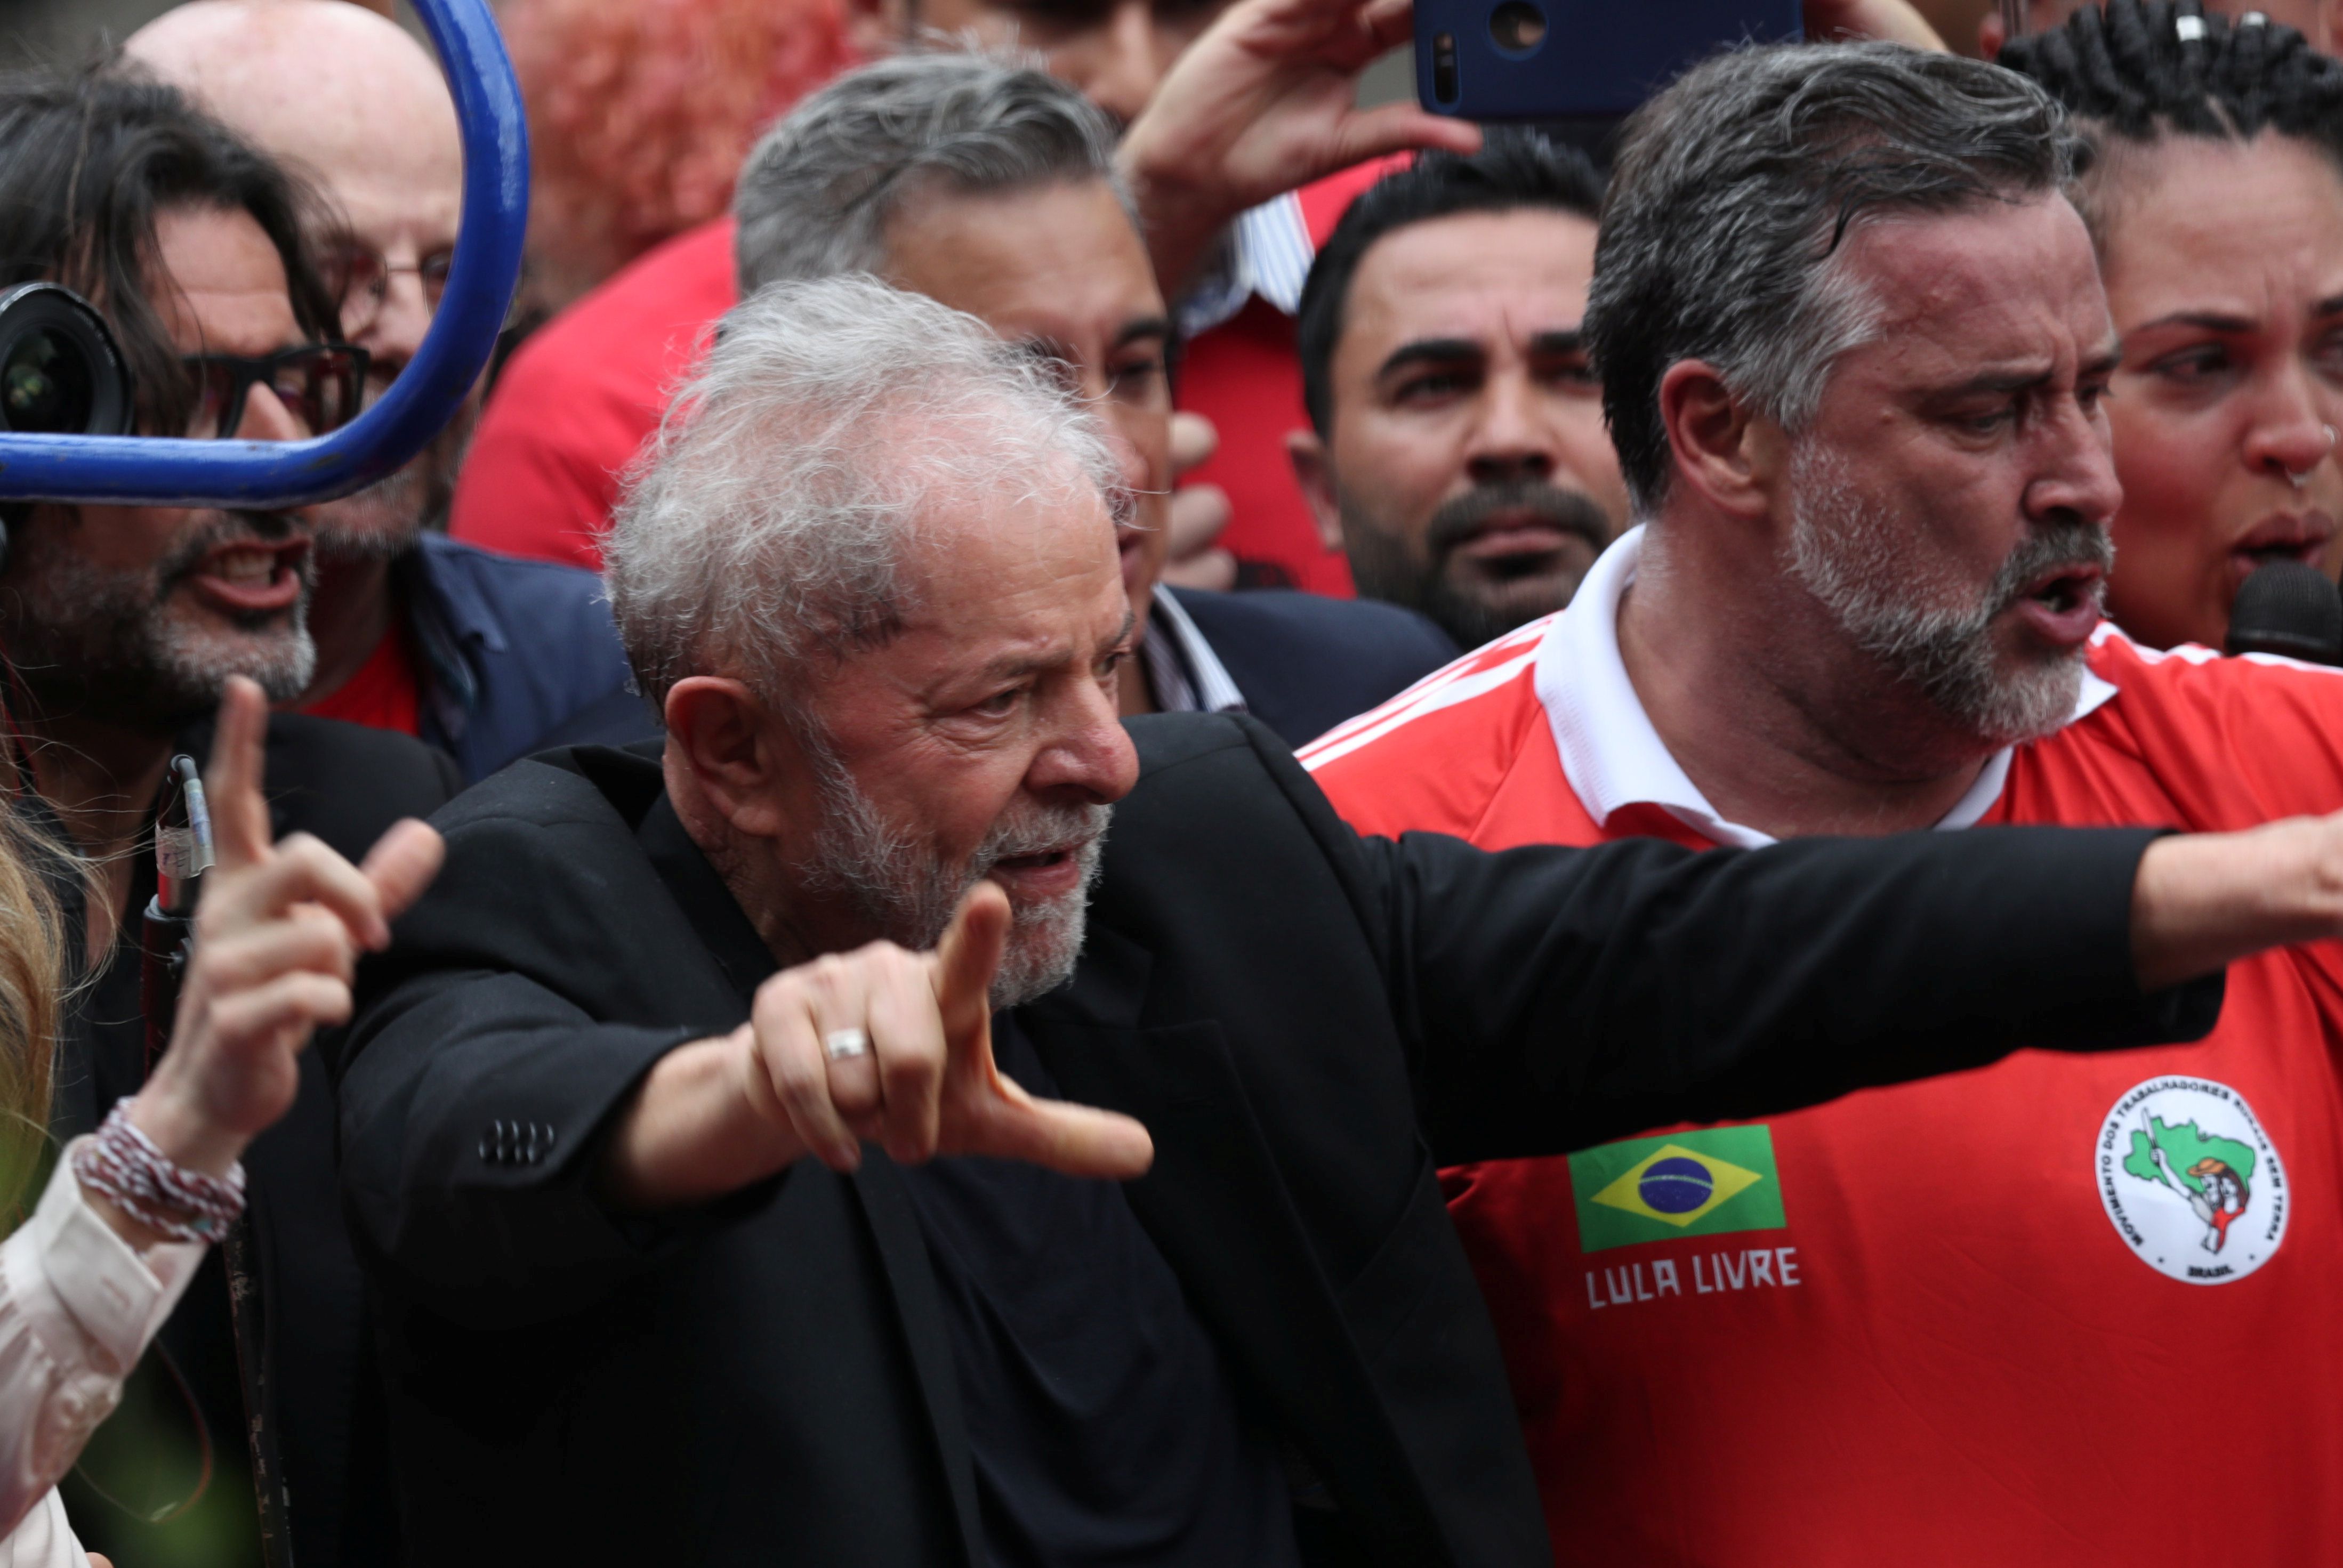 Former Brazilian President Luiz Inacio Lula da Silva arrives to deliver a speech after being released from prison, in Sao Bernardo do Campo, Brazil November 9, 2019. REUTERS/Amanda Perobelli